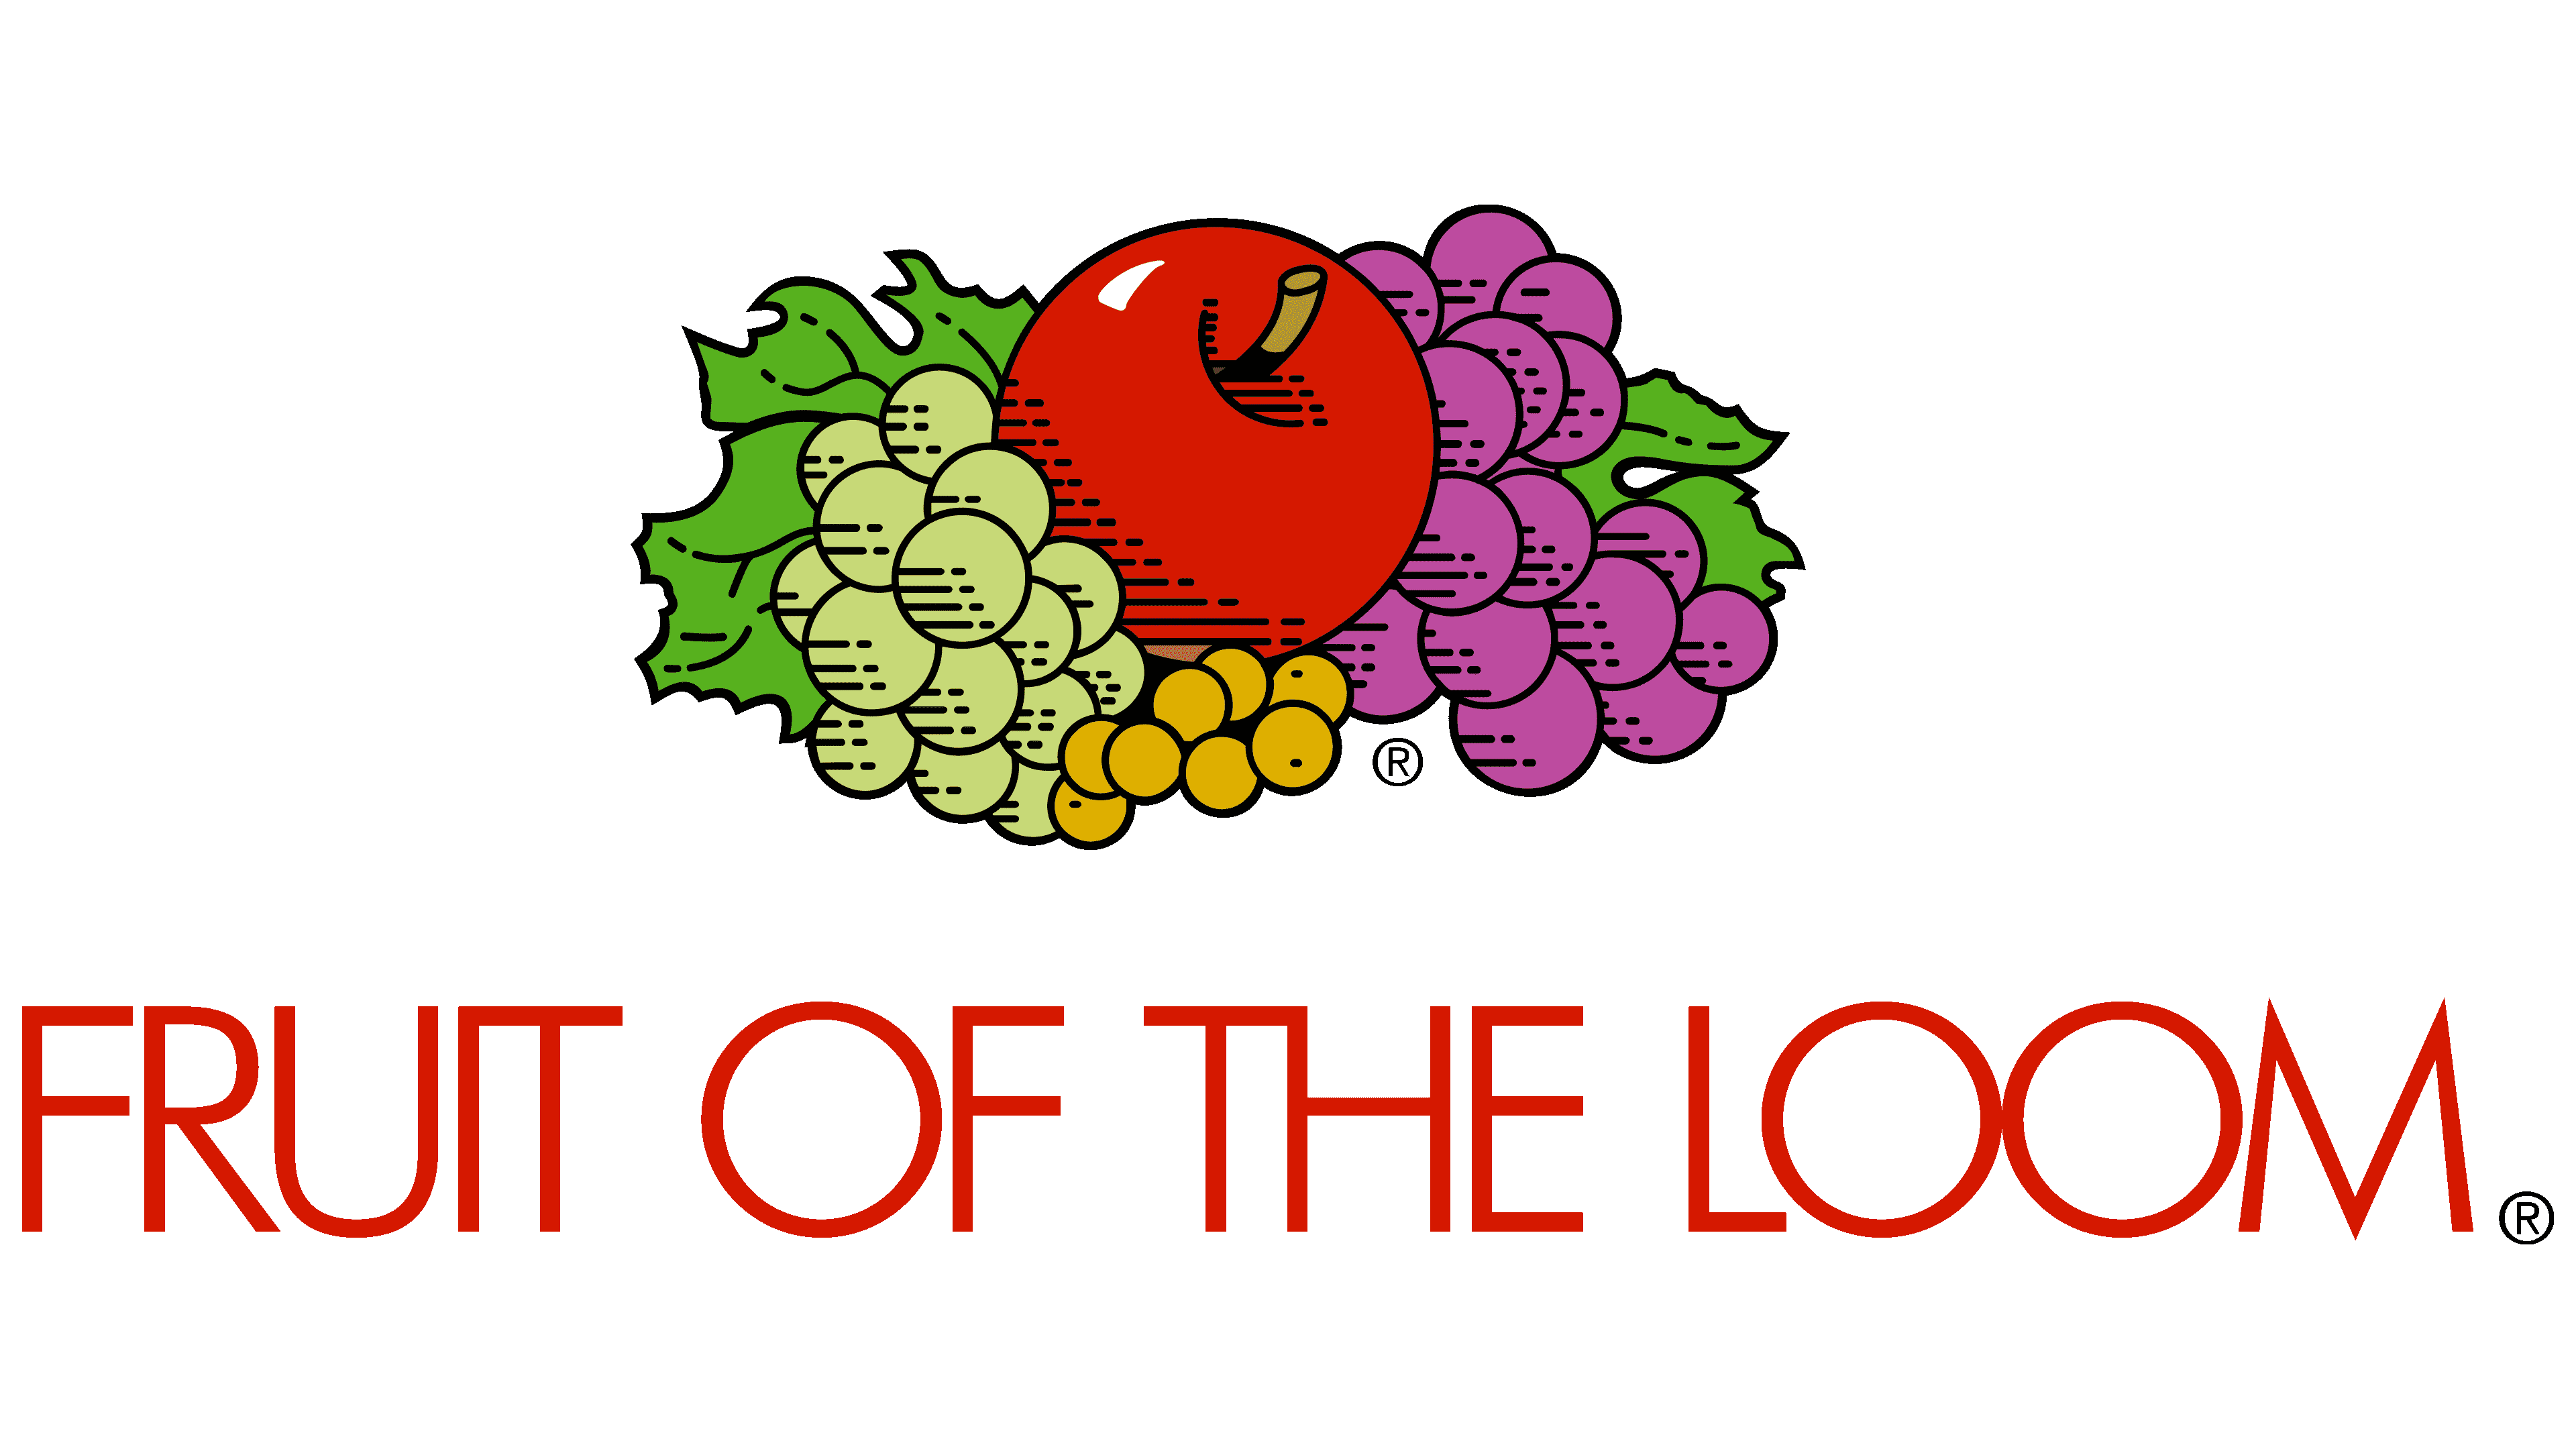 fruit of the loom logo